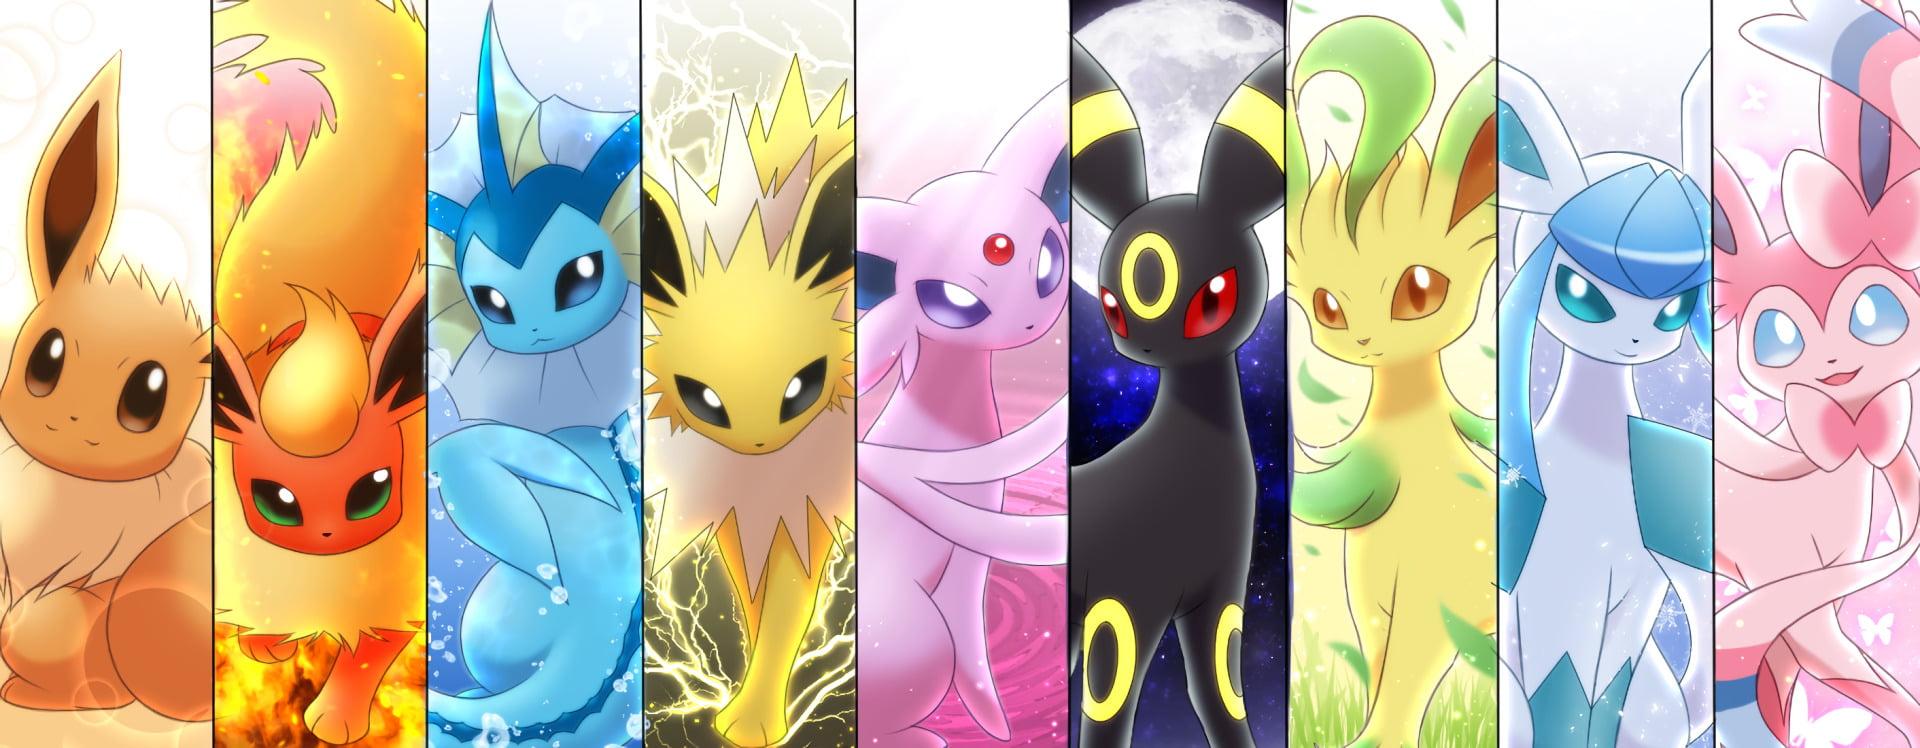 HD wallpaper: Pokémon, Vaporeon (Pokémon)